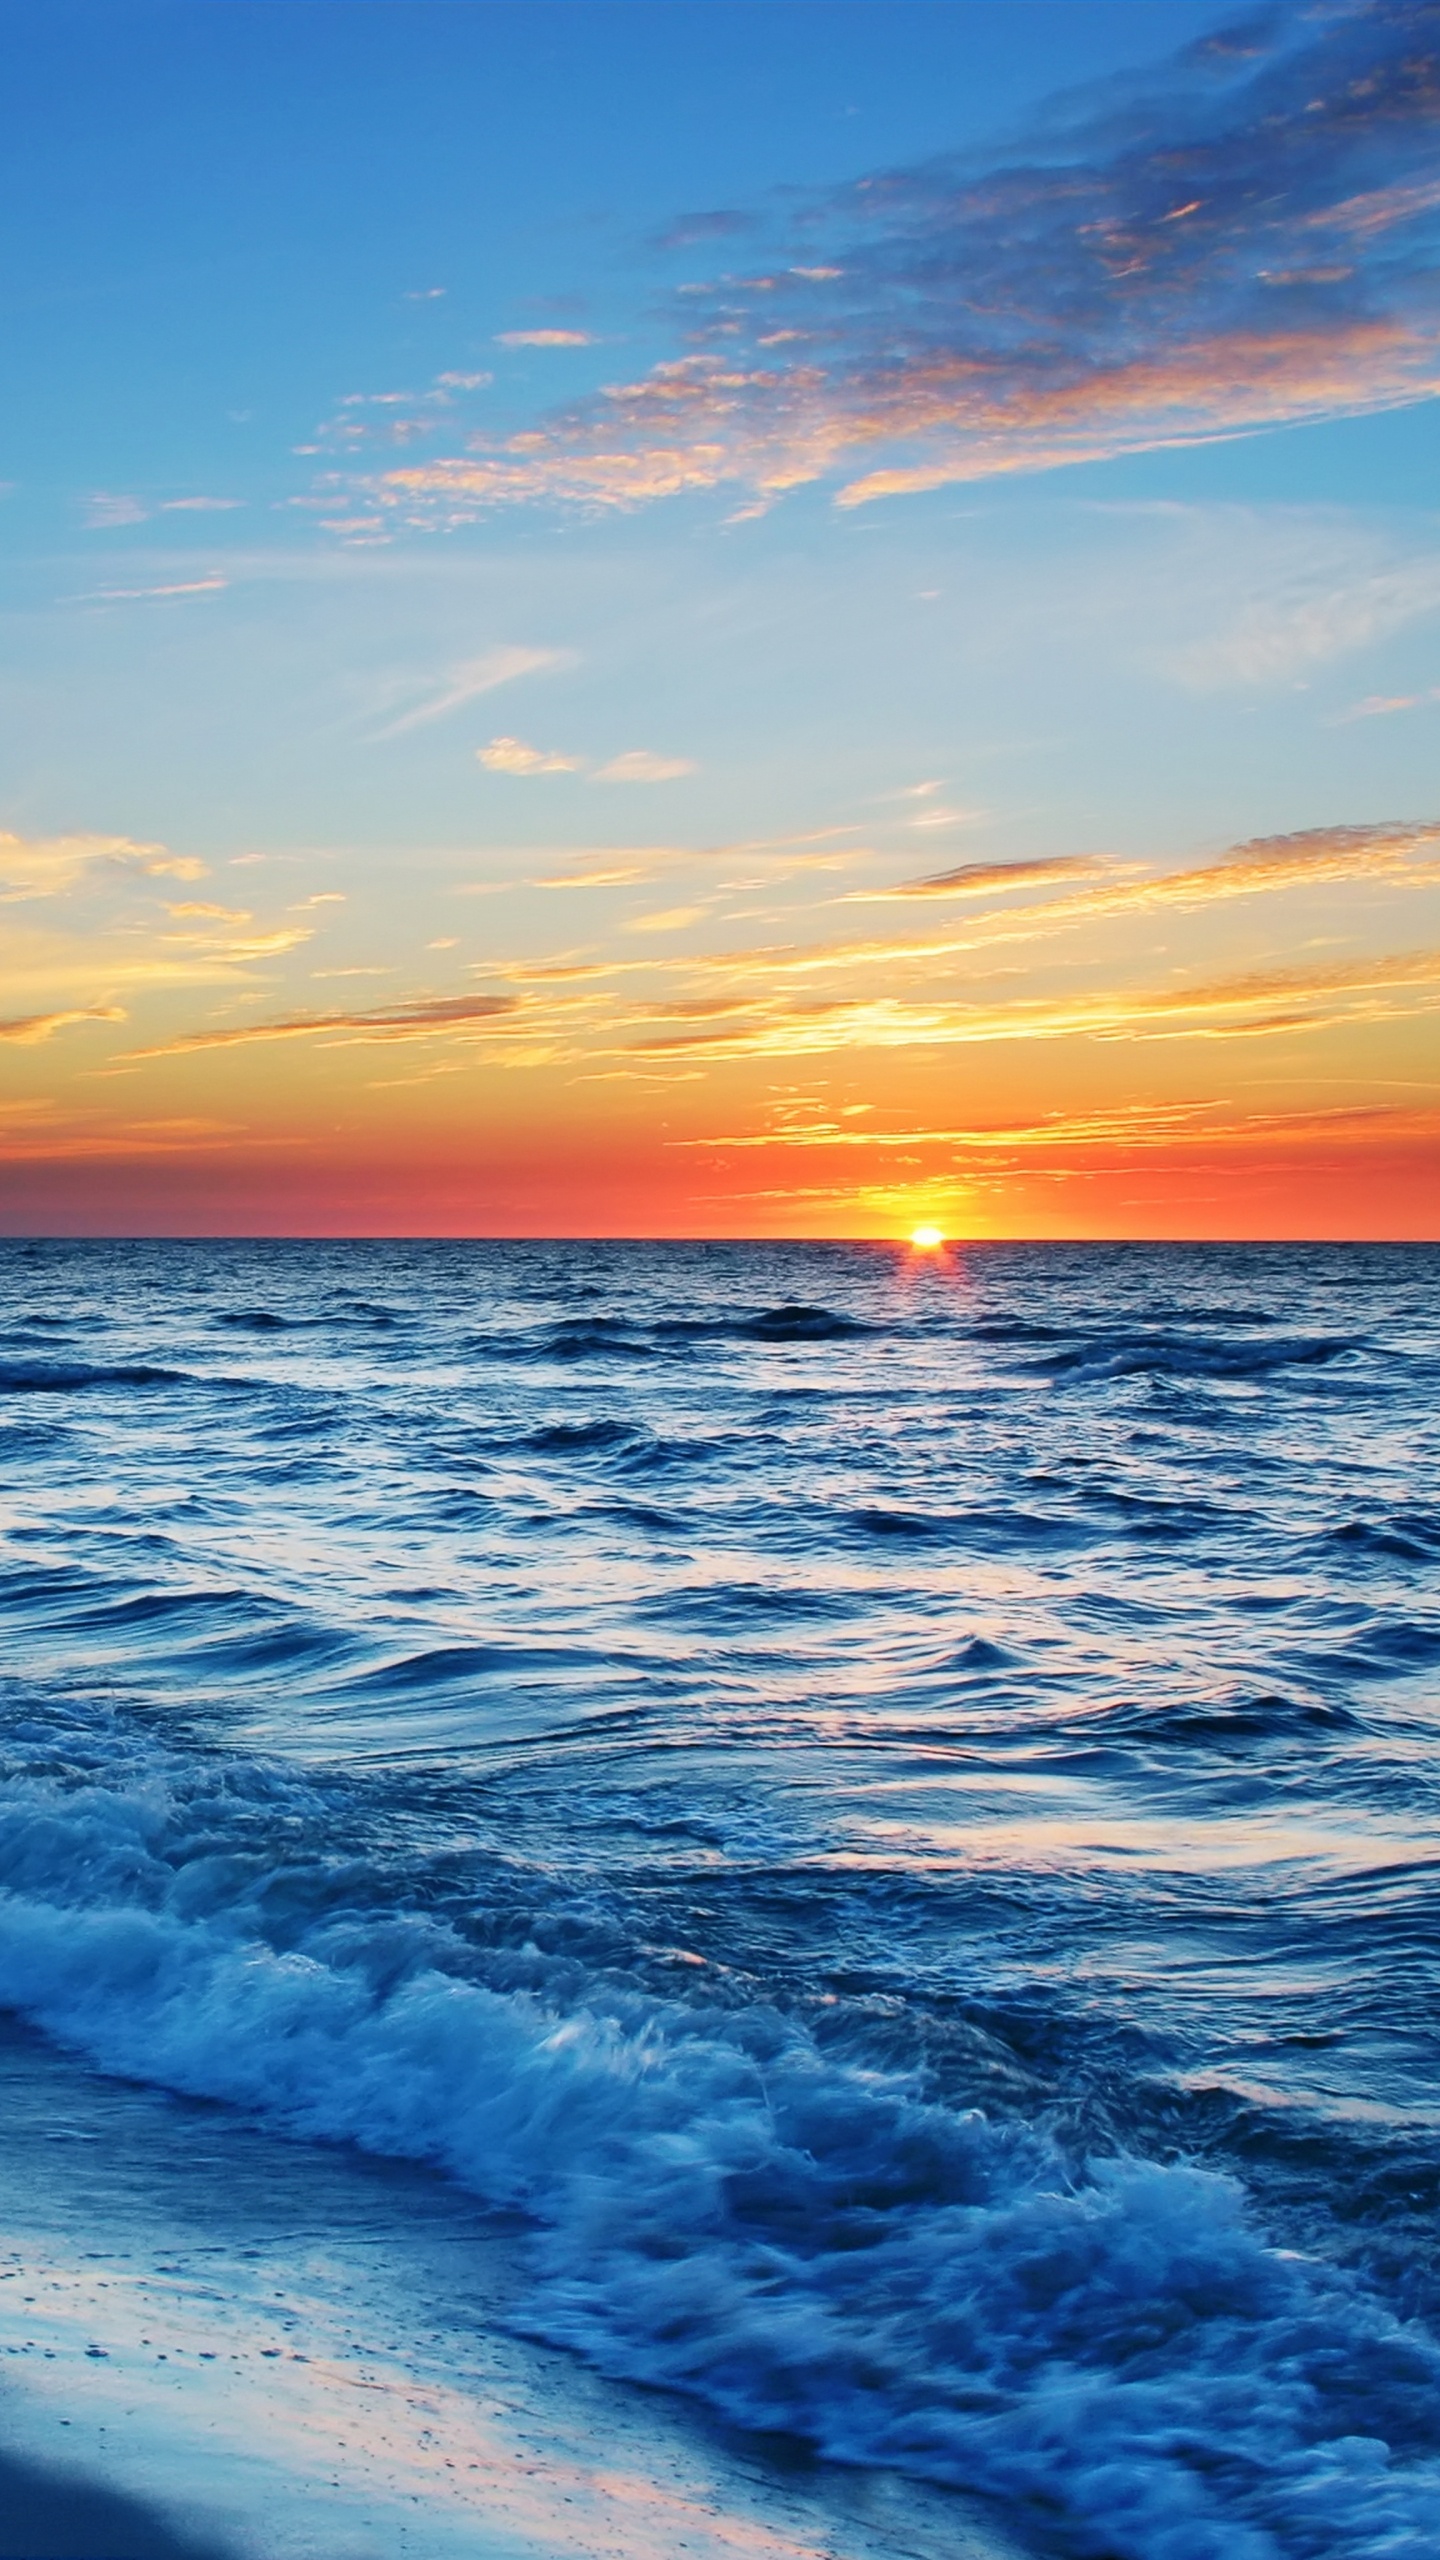 Ocean Waves Crashing on Shore During Sunset. Wallpaper in 1440x2560 Resolution